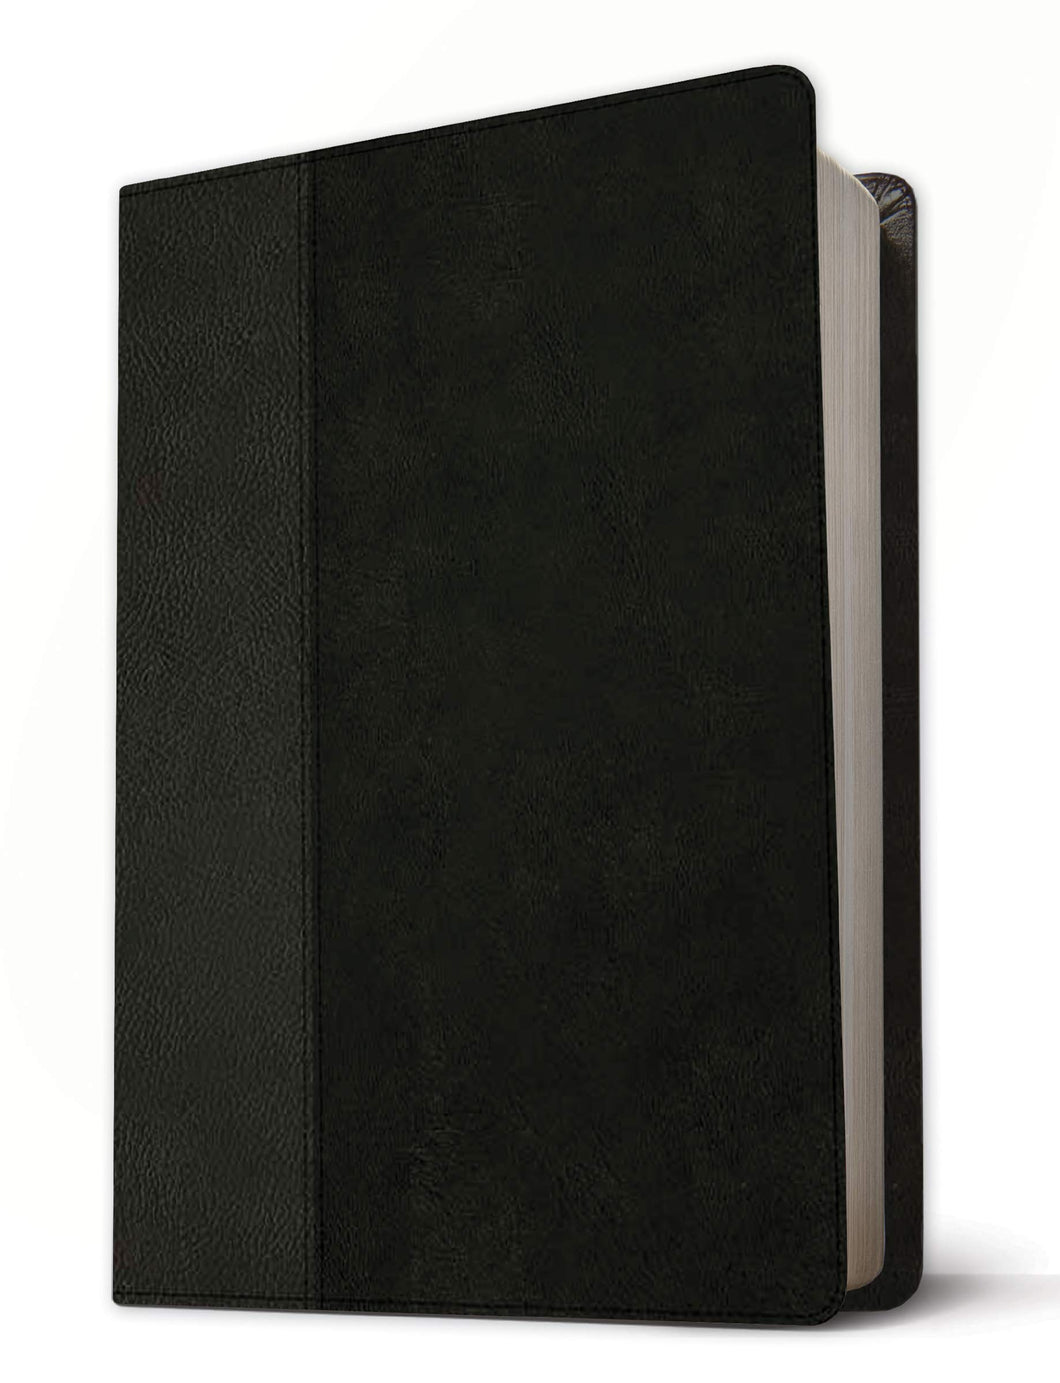 NLT Life Recovery Bible, Second Edition, Personal Size (Leatherlike, Black/Onyx) Imitation Leather